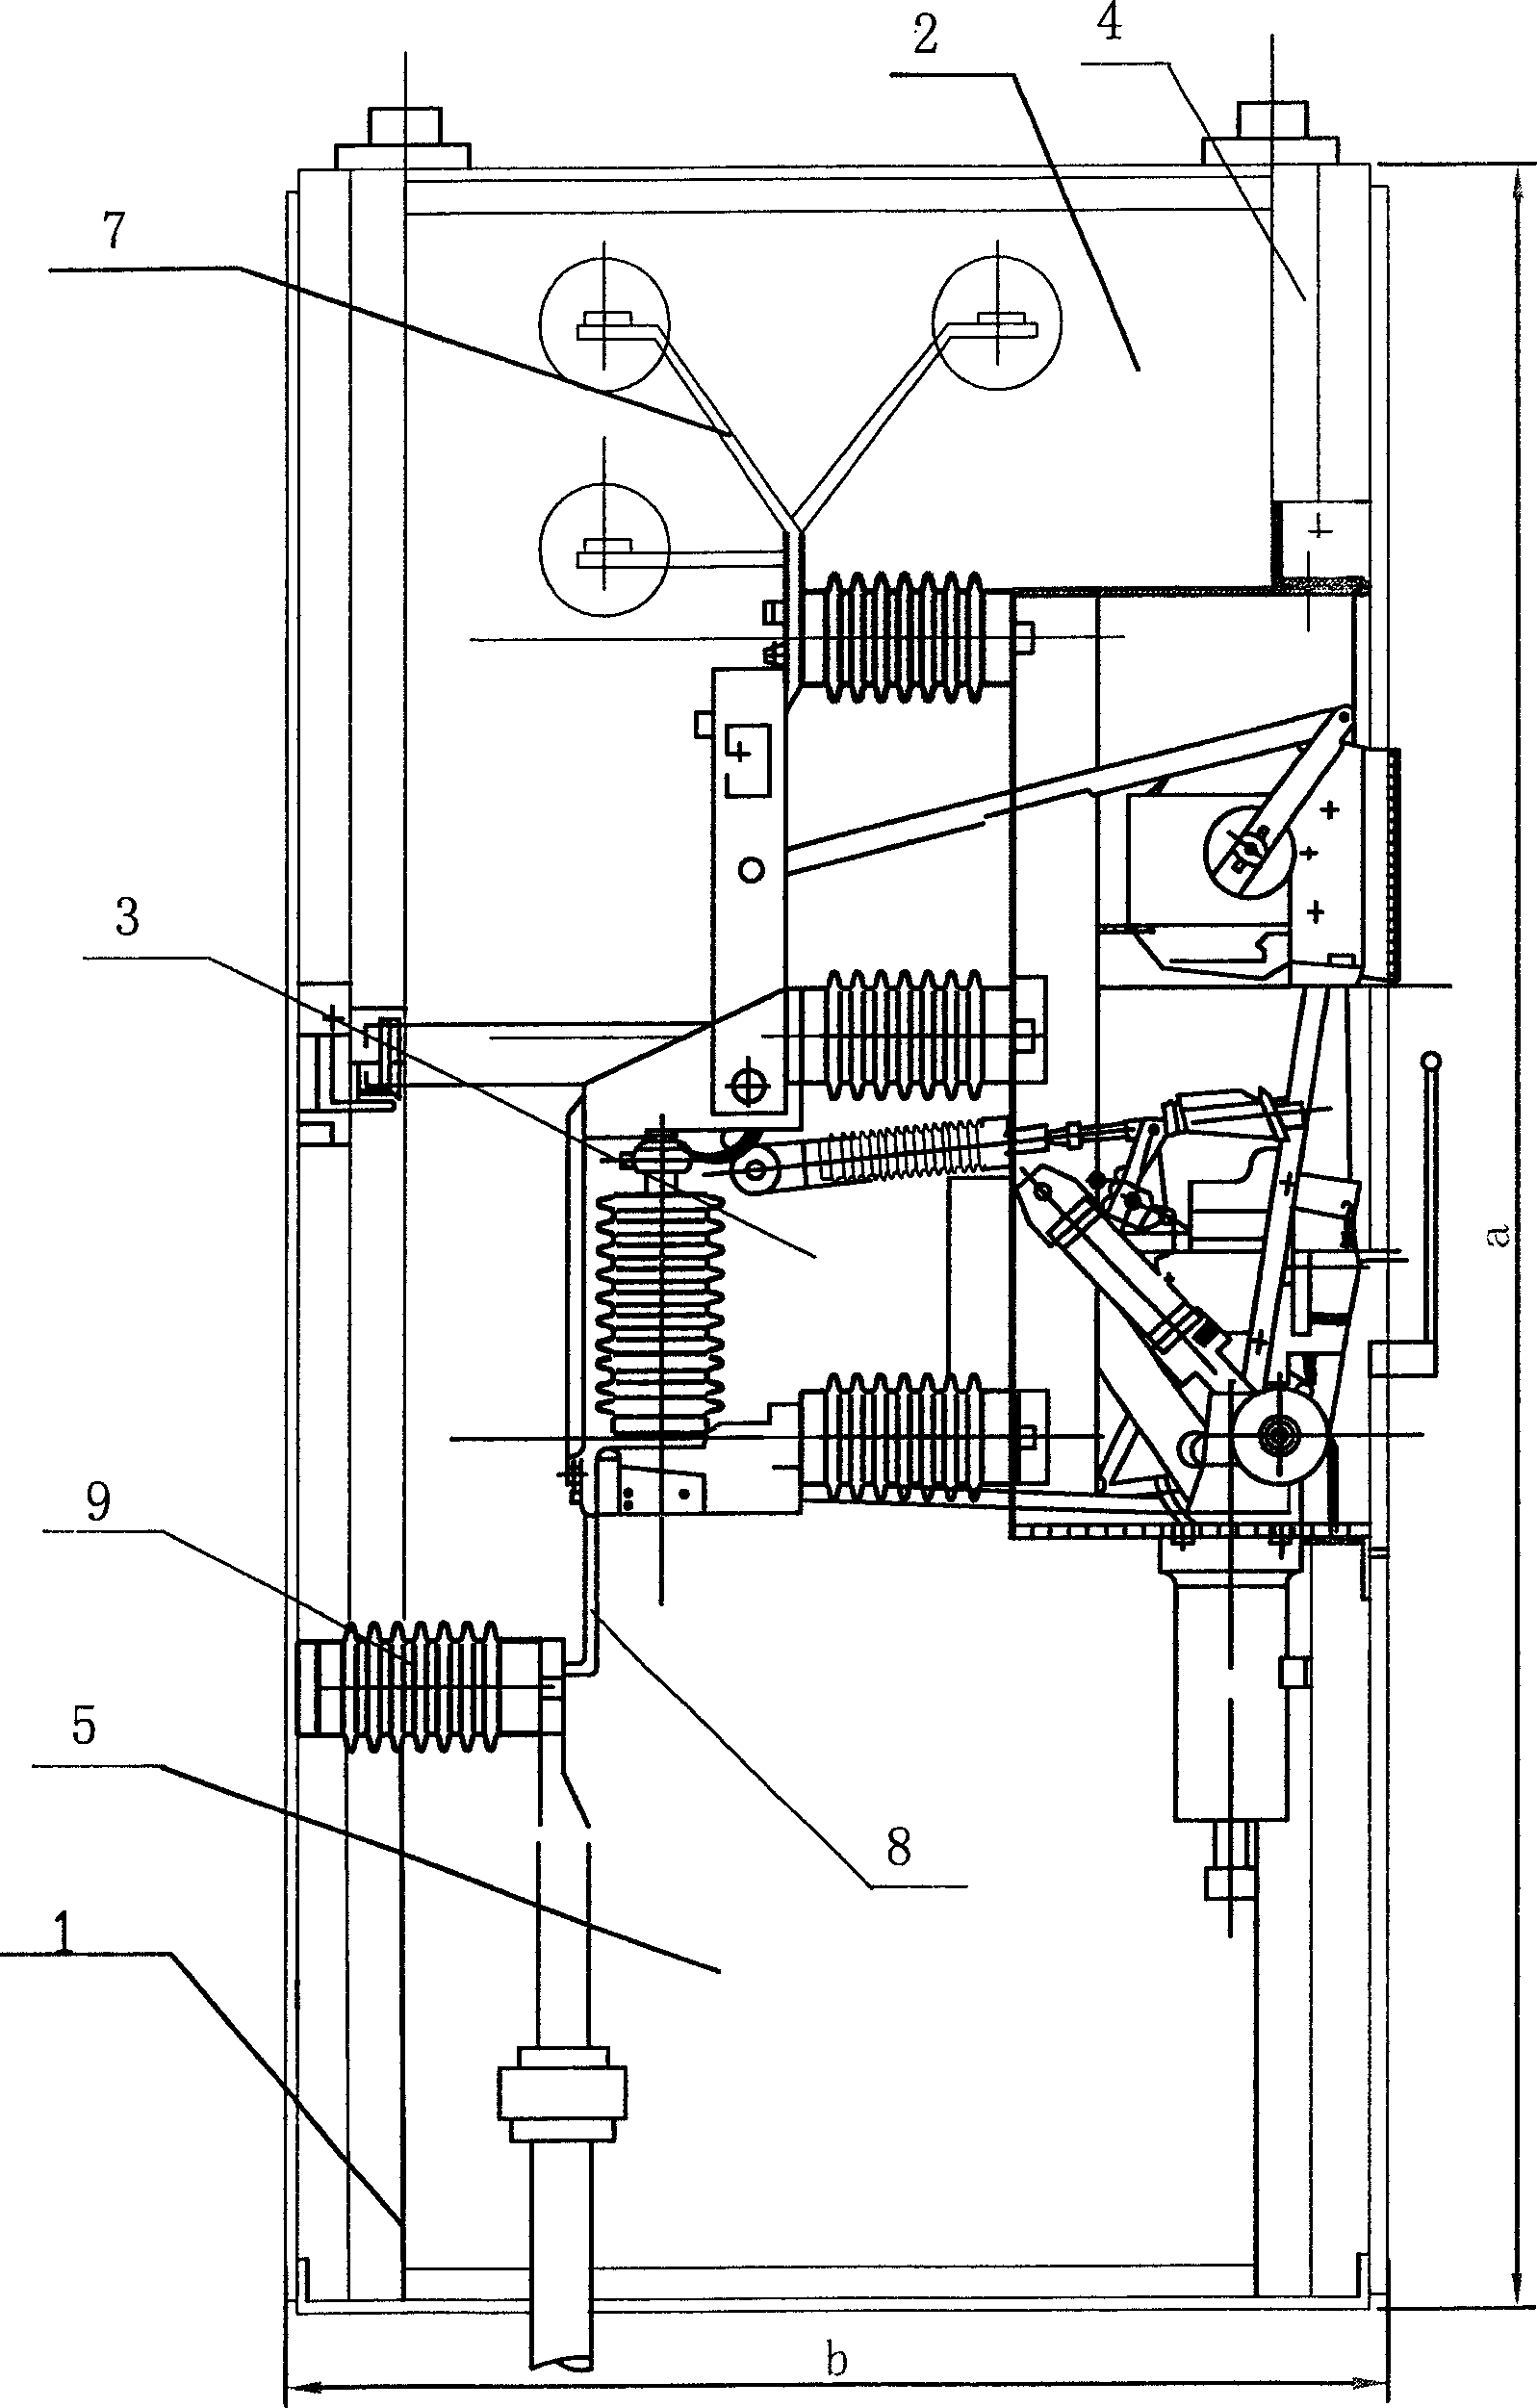 High voltage switchgear of sensing technique